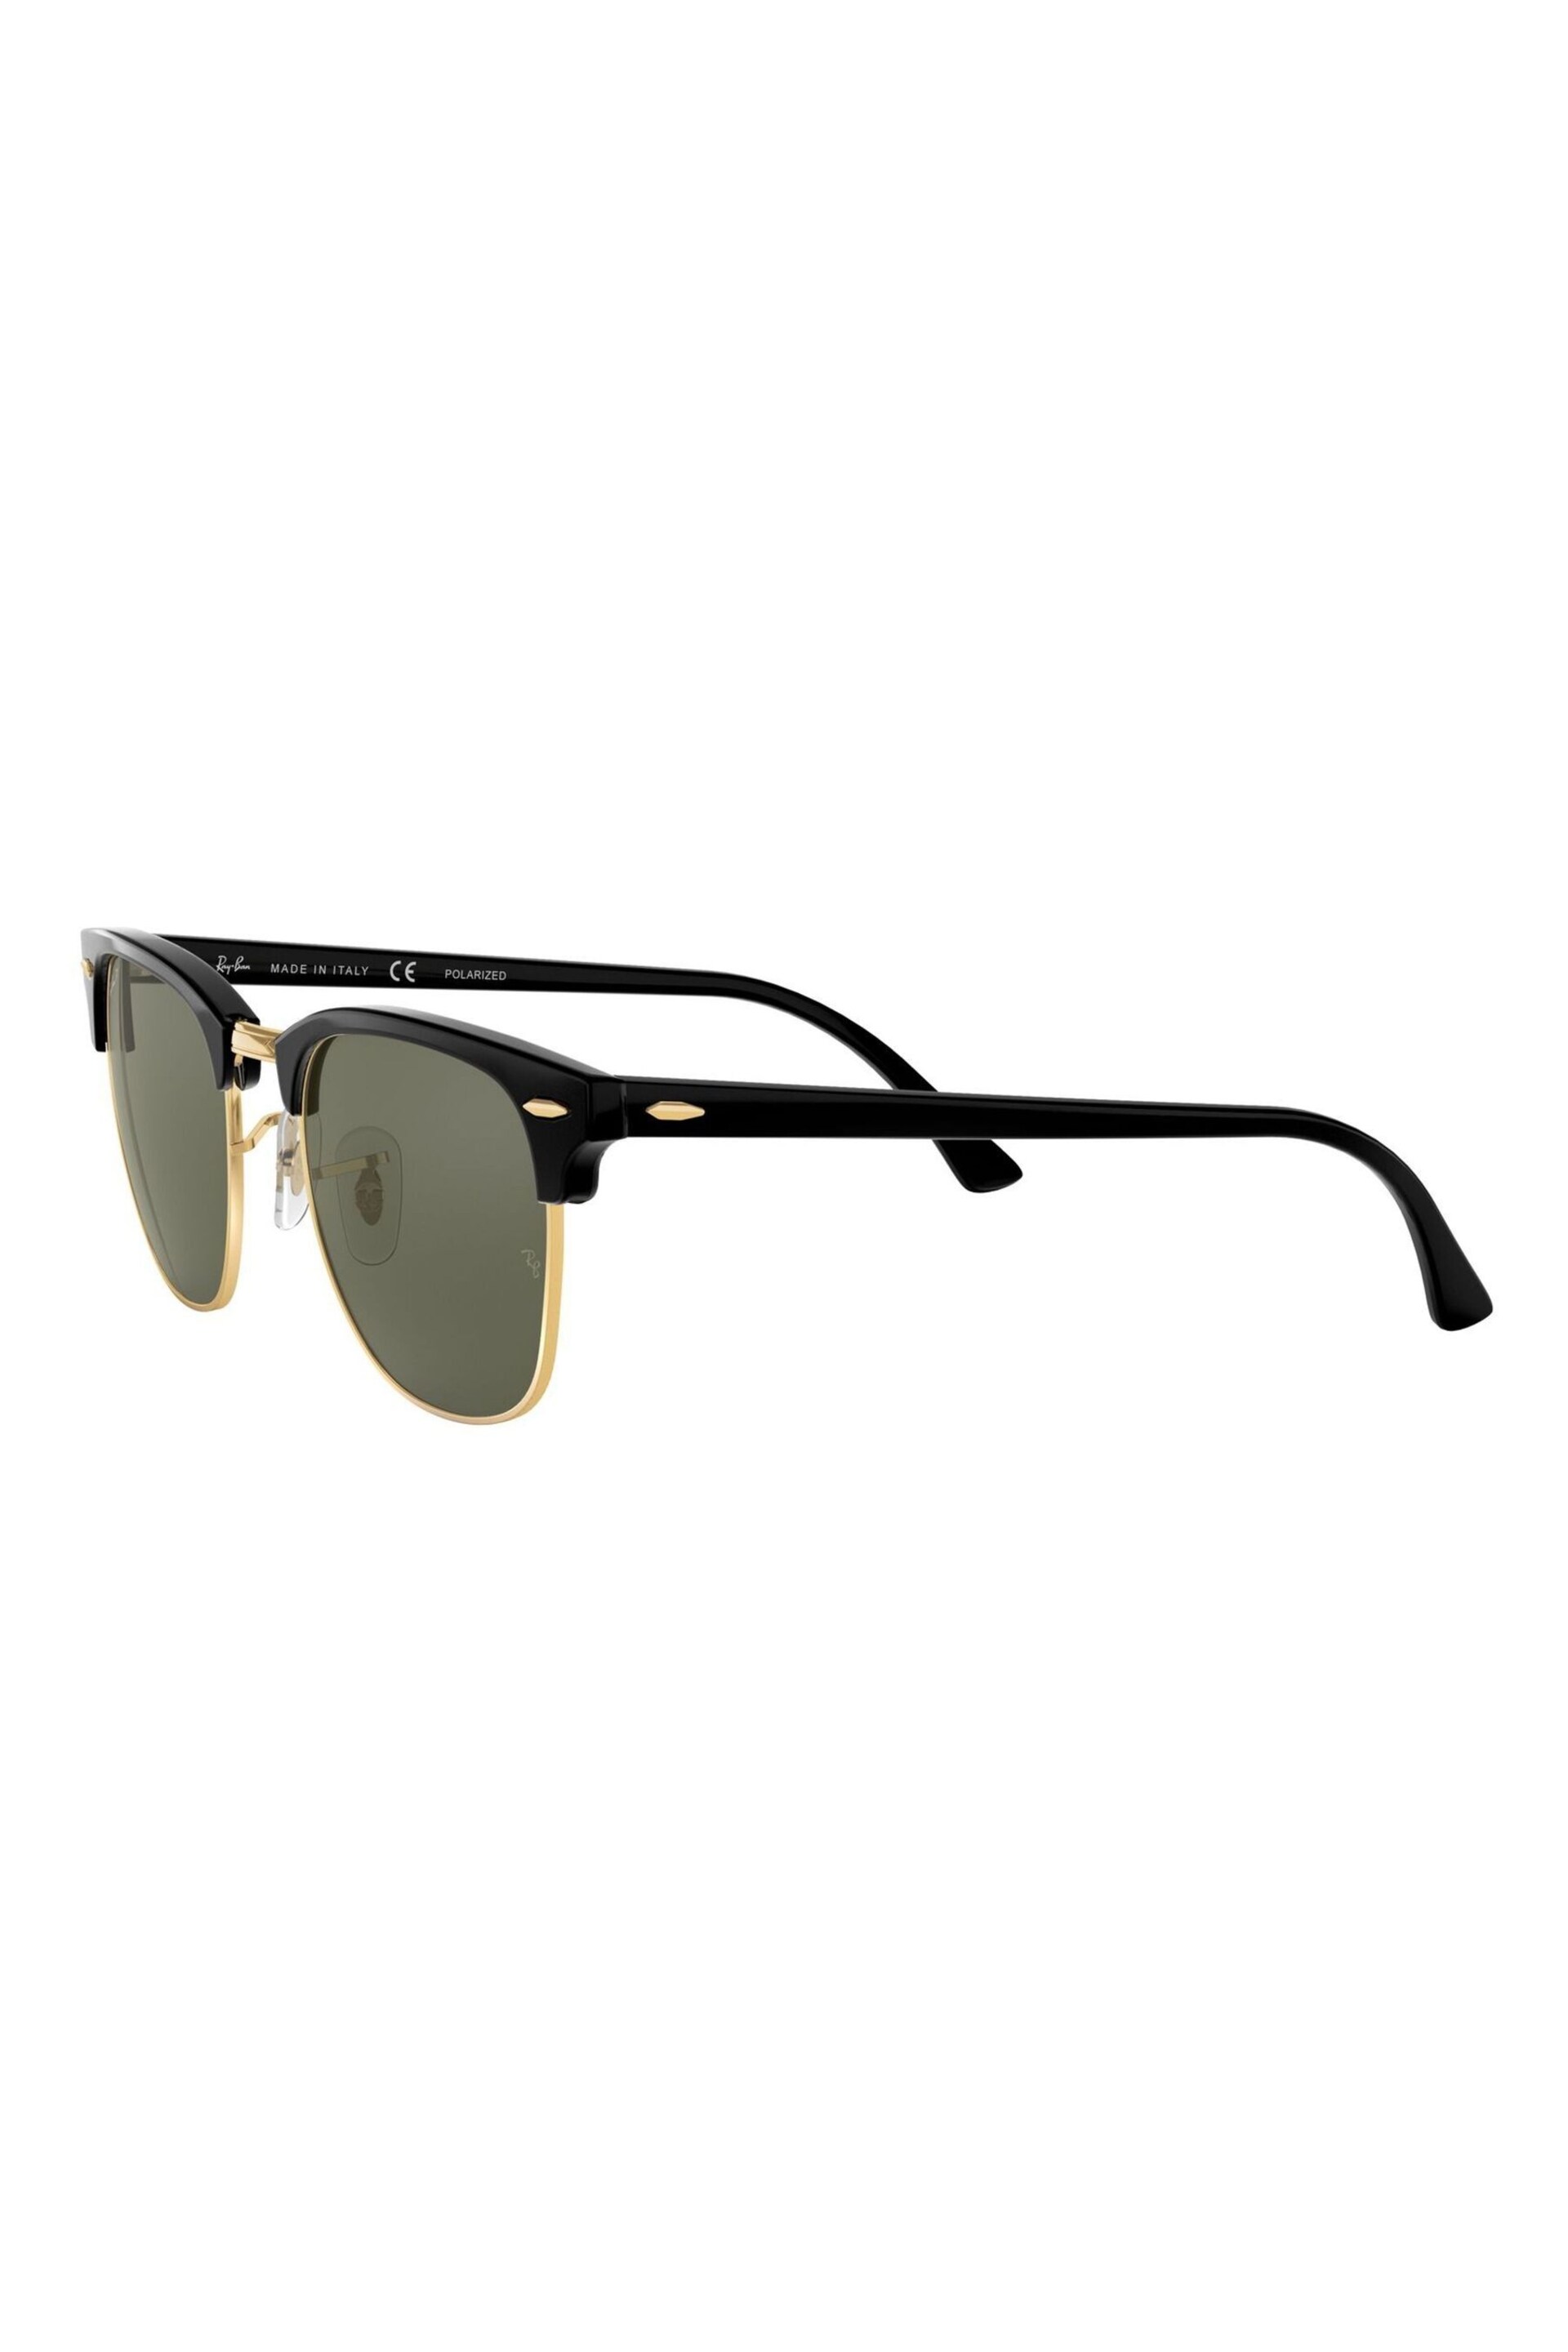 Ray-Ban Polarised Clubmaster Sunglasses - Image 12 of 12